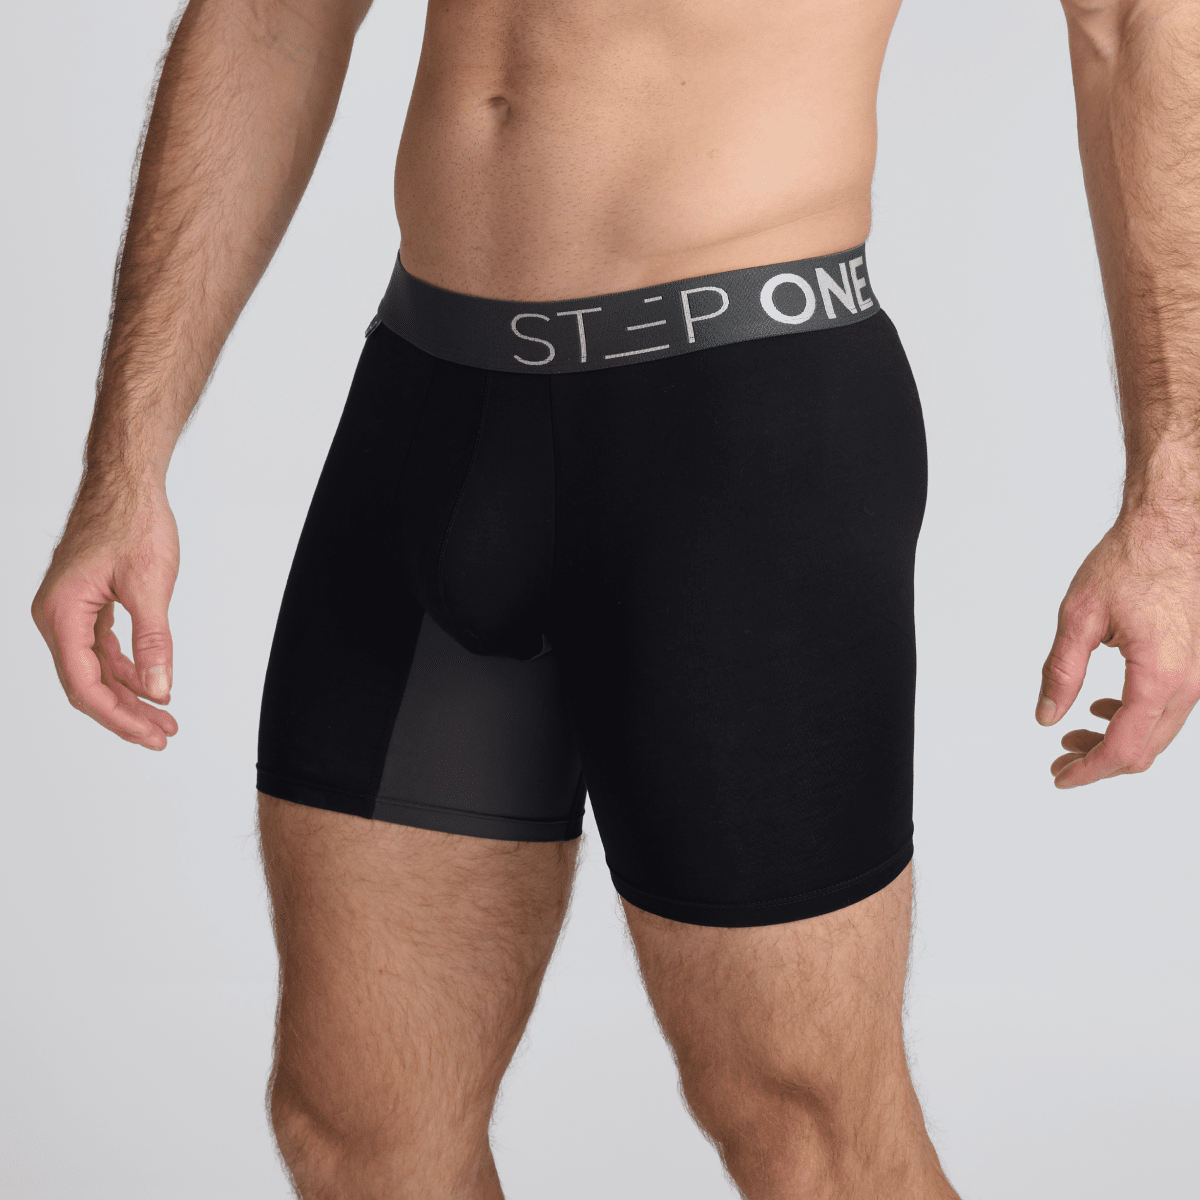 Boxer Brief - Black Currants - Bamboo Underwear